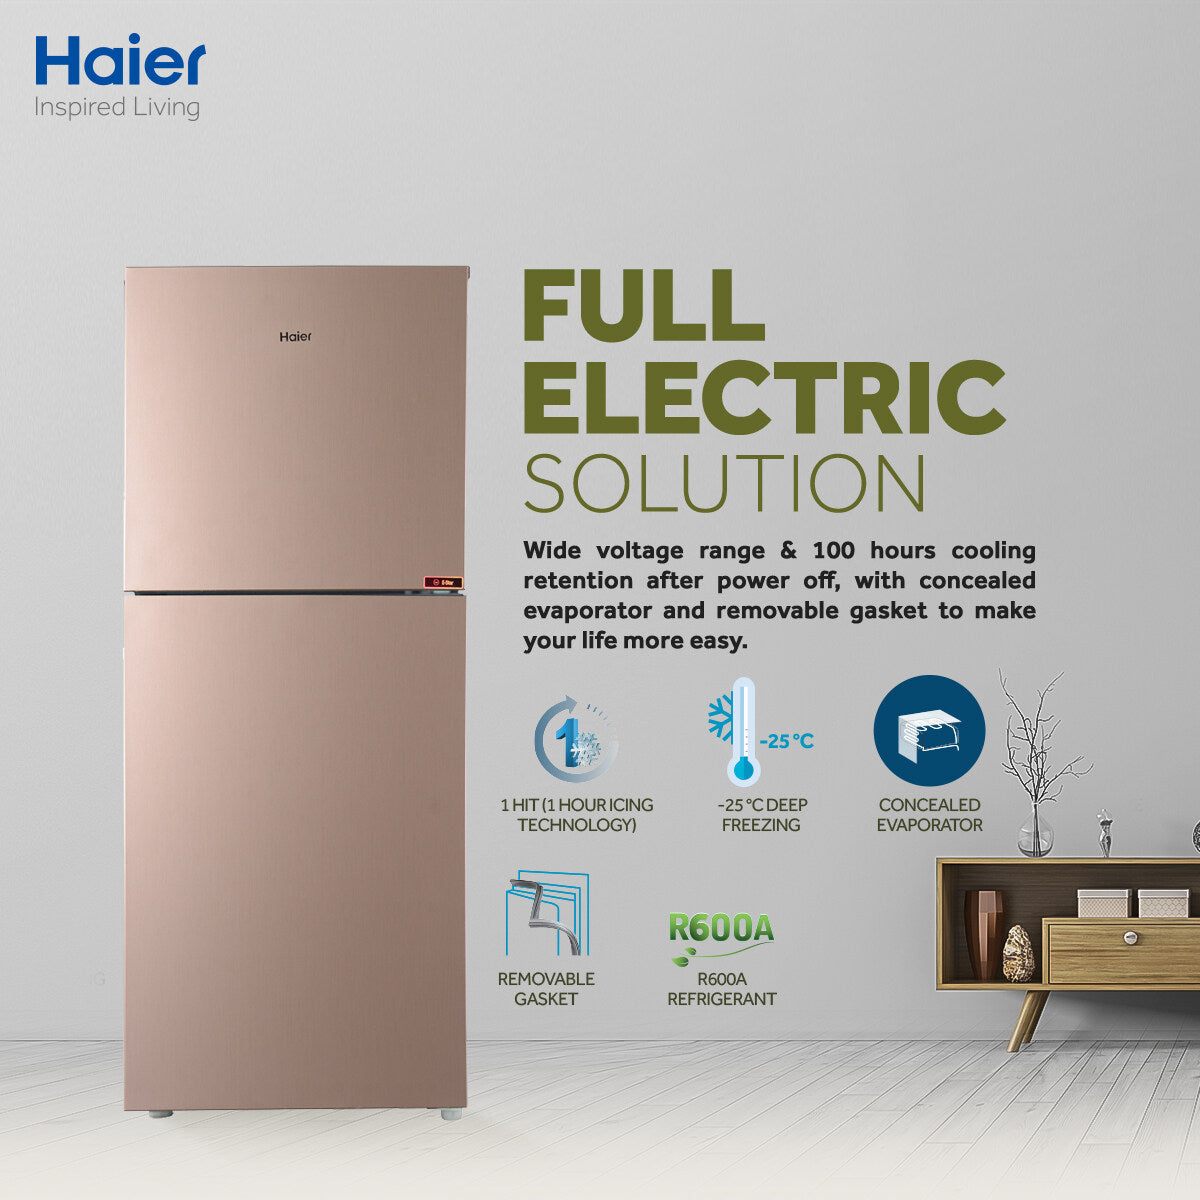 Haier Refrigerators 09 Cu Ft-E-Star Series-HRF-246 EBD-Deepest Freeze-Direct Cool-1 Hour Icing Technology-Metal Door-10 Years Warranty